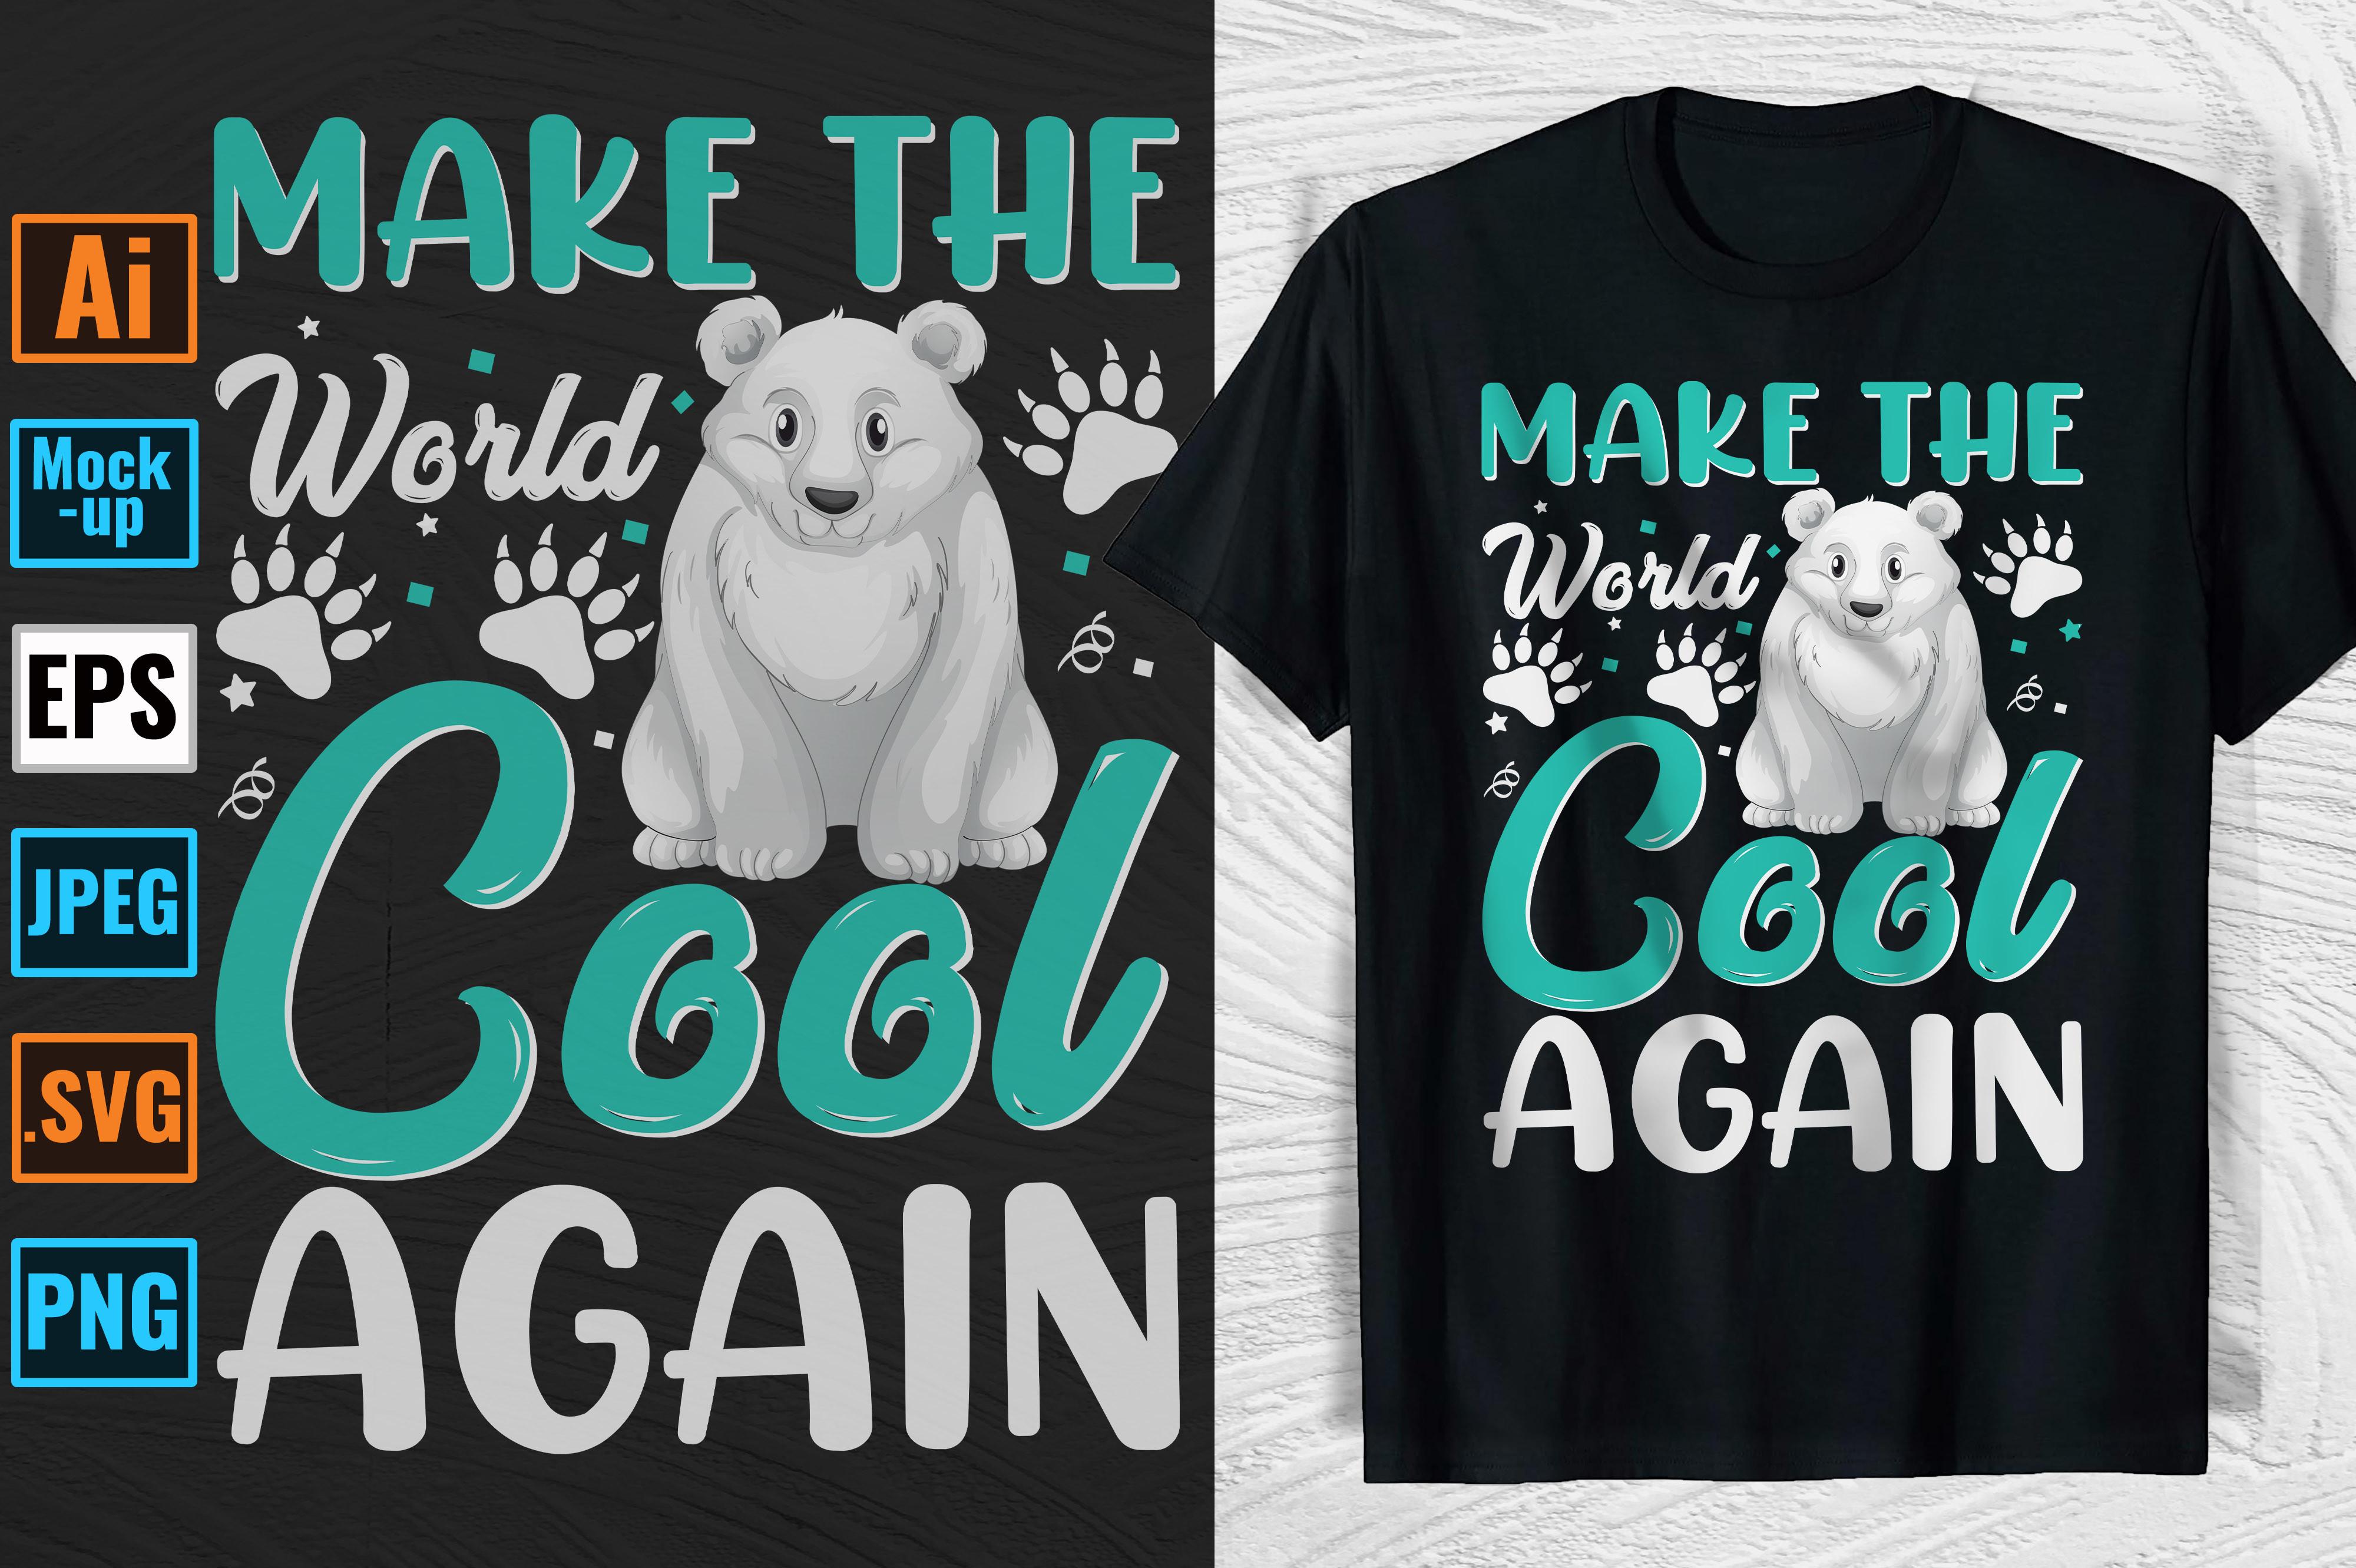 Polar Bear T-shirt and Mug Design